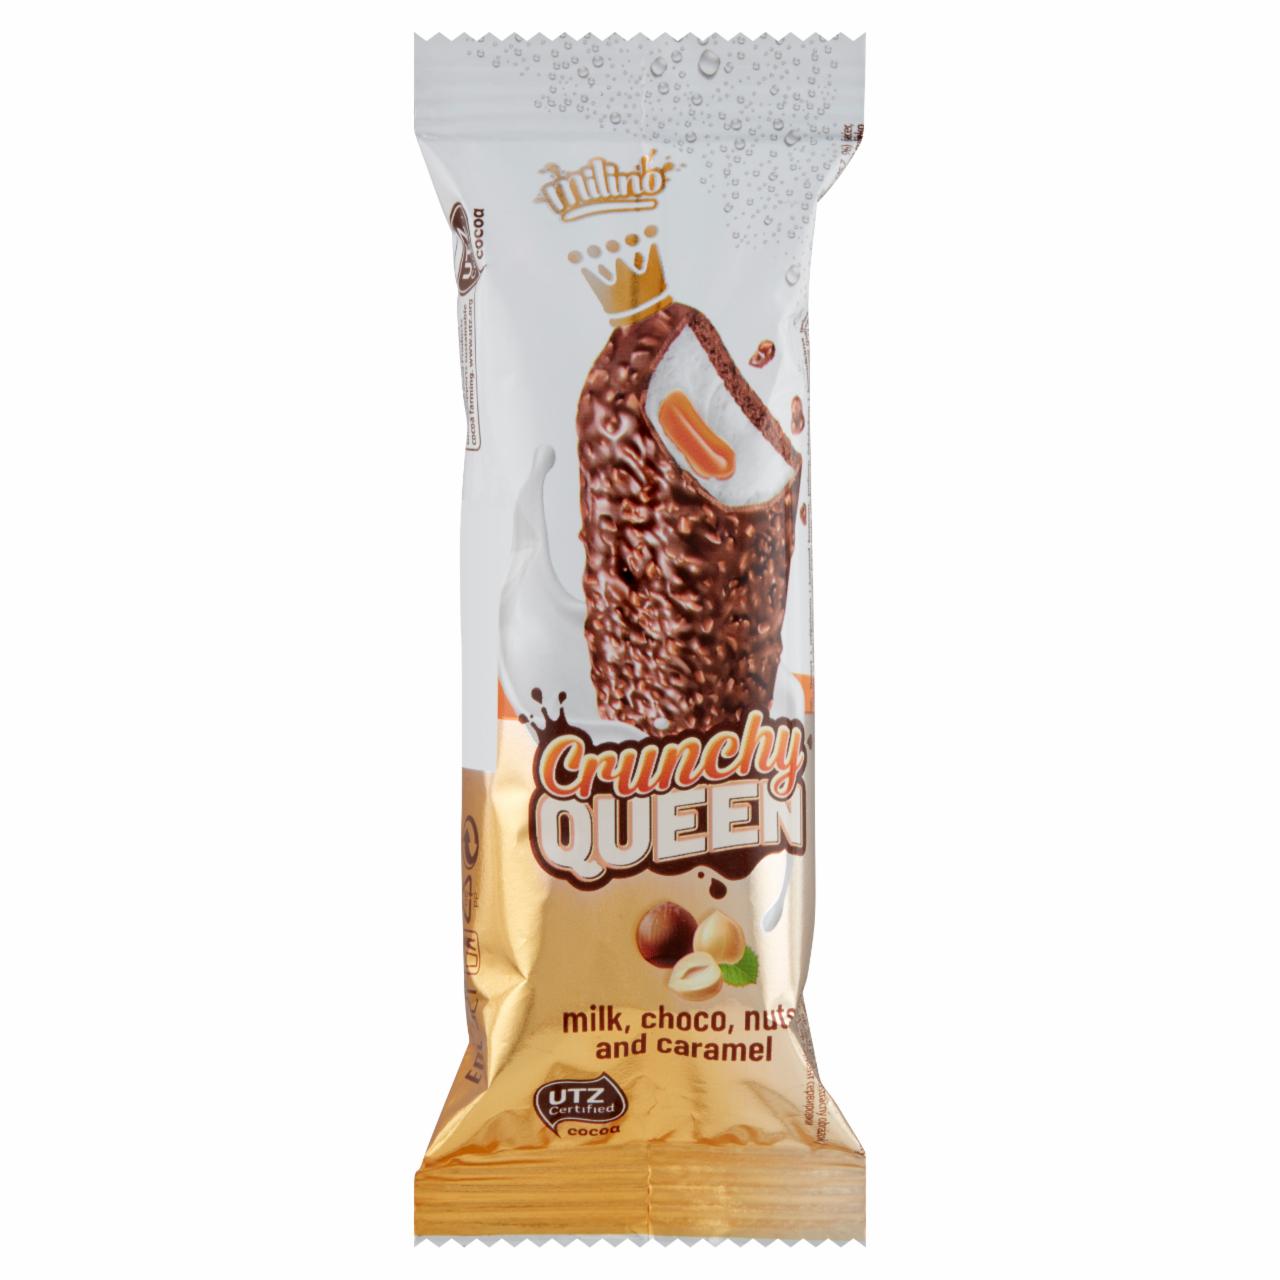 Képek - Crunchy Queen szelet 35 g